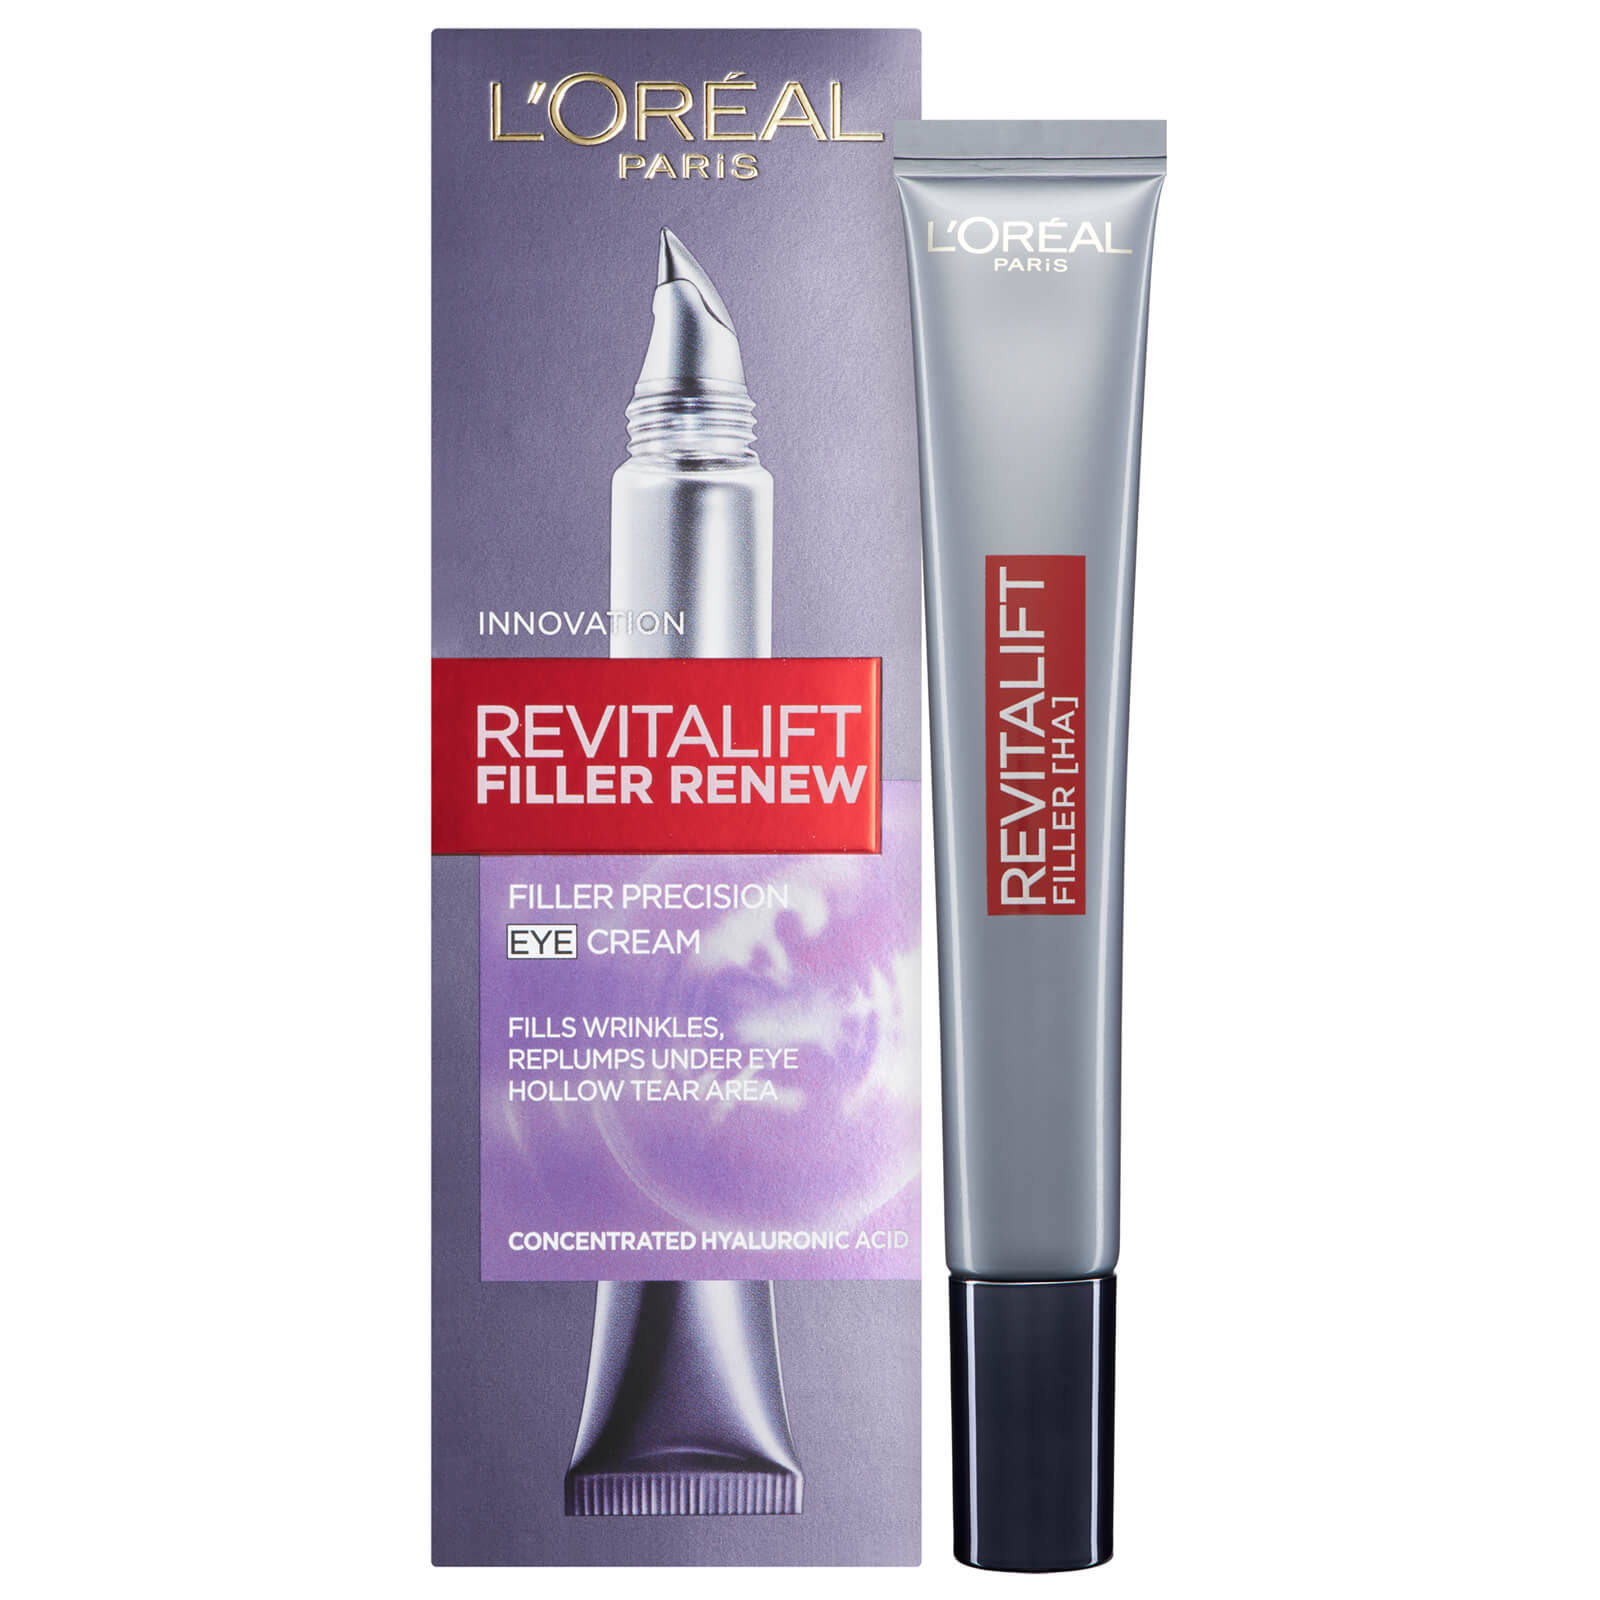 L'Oreal Paris Revitalift Filler Renew Eye Cream - 15ml